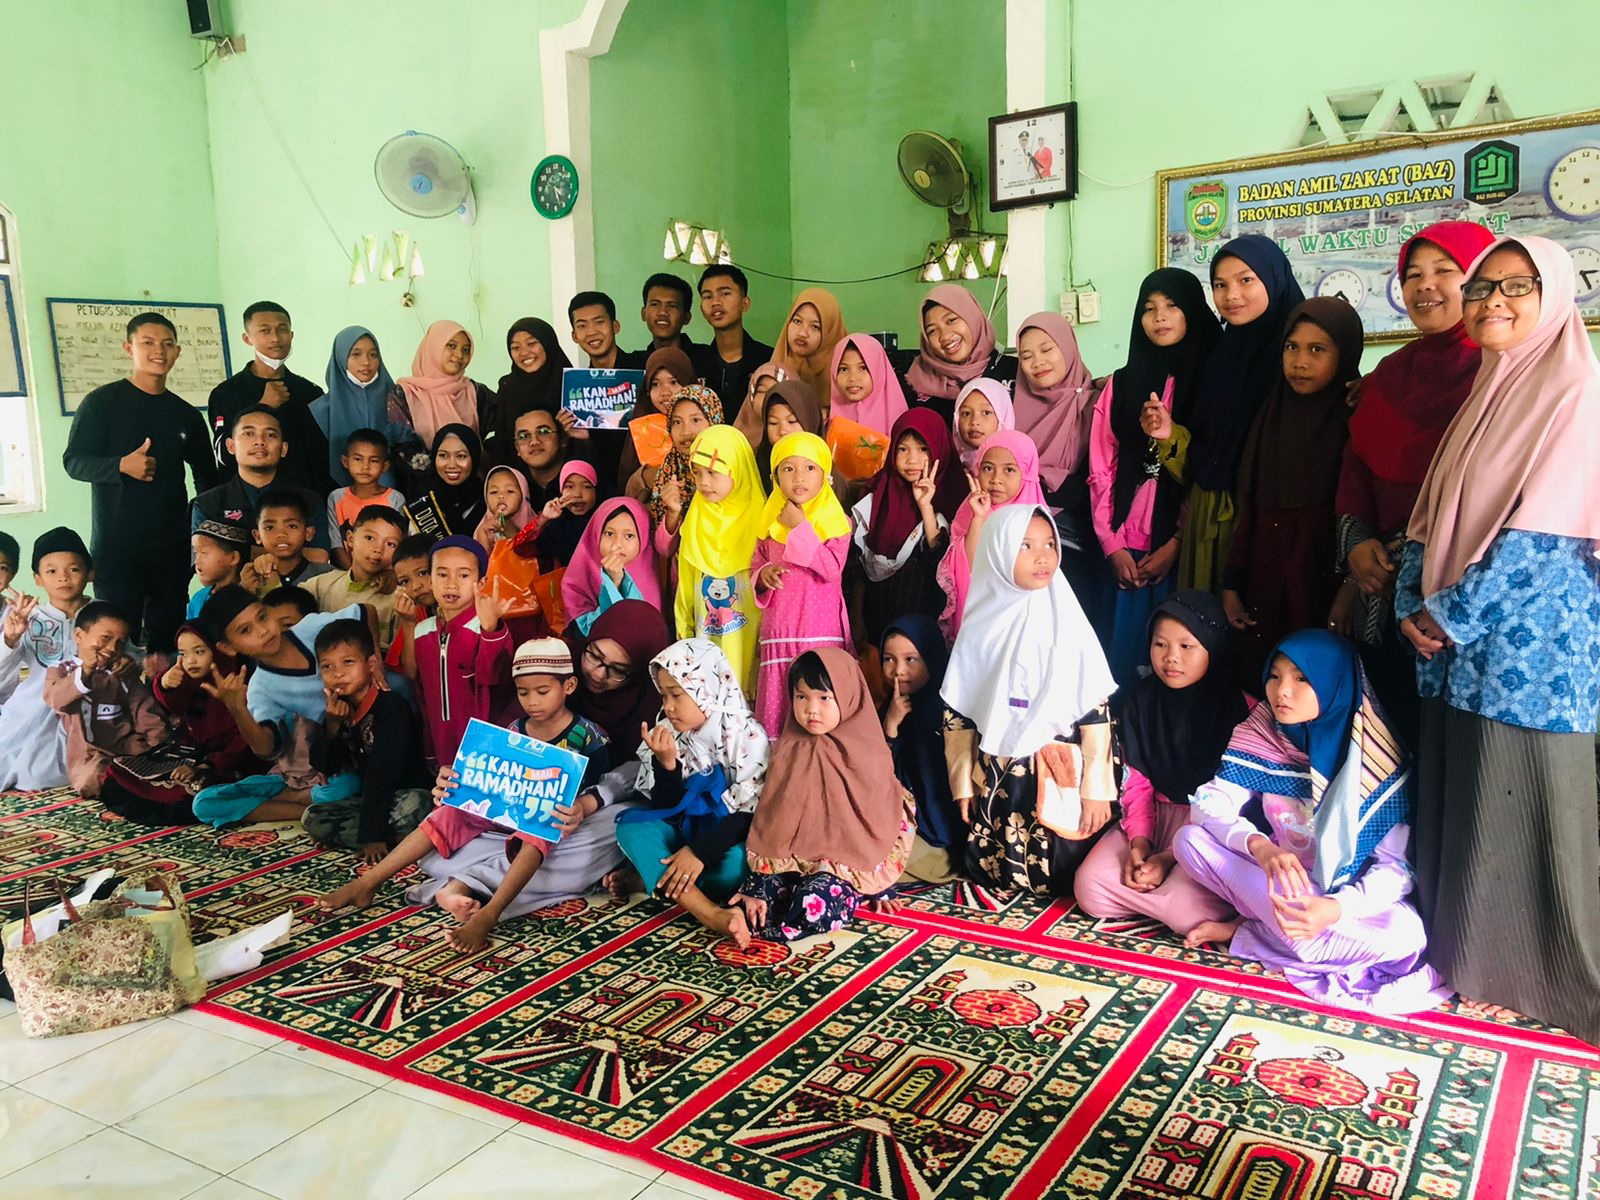 ACT MRI Prabumulih berkolaborasi dengan Duta Kopi Indonesia gaungkan sambut ramadhan dengan Program “Masjidku Bersih, Kan Mau Ramadhan” 